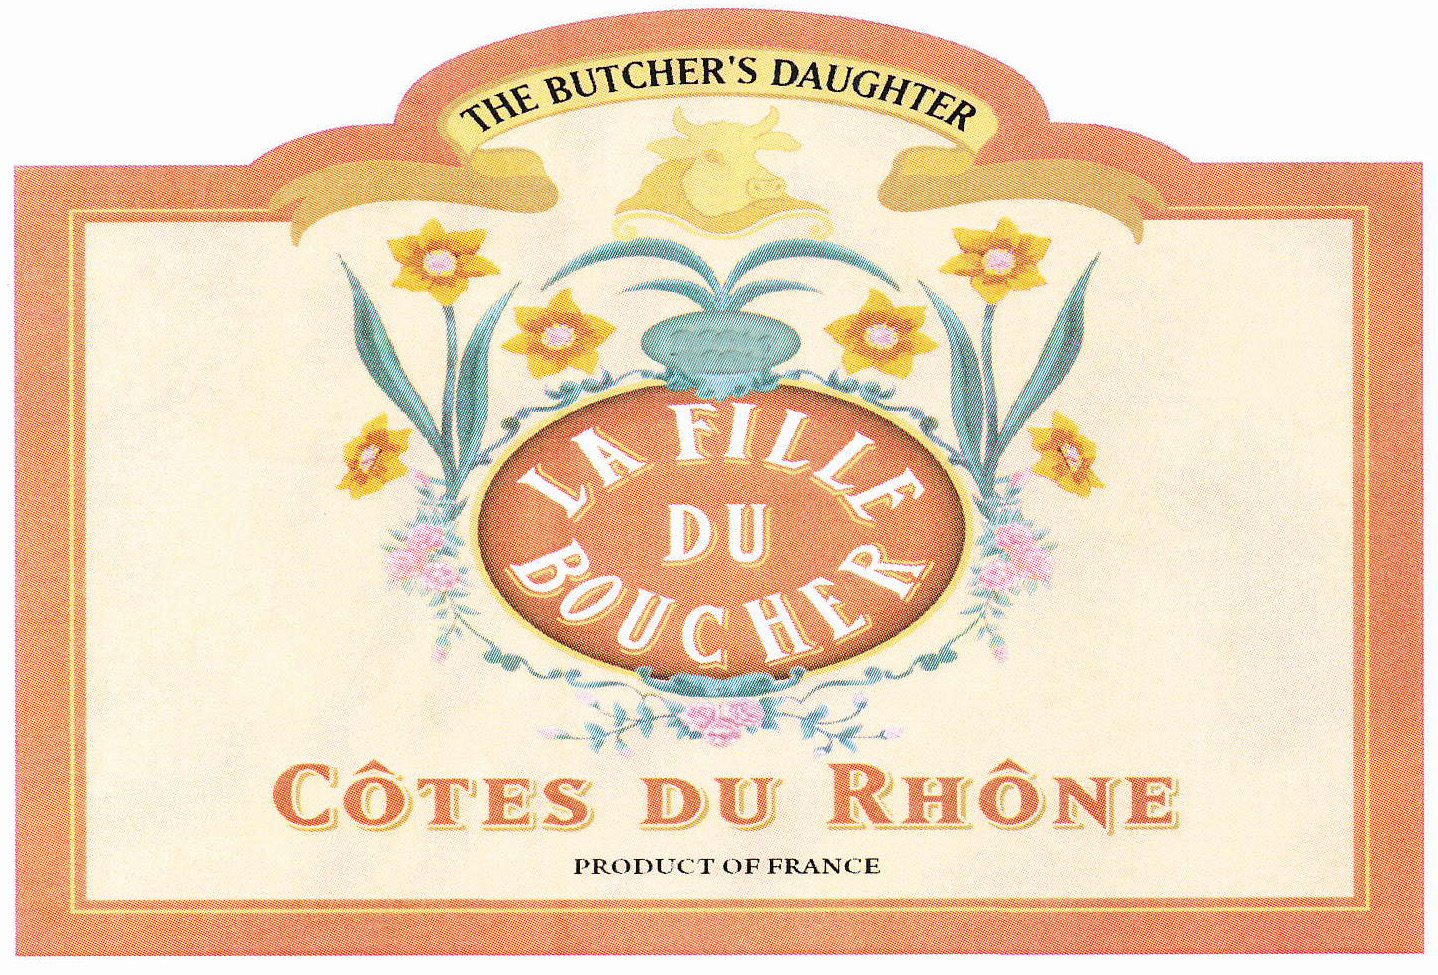 The Butcher's Daughter - Cotes du Rhone label